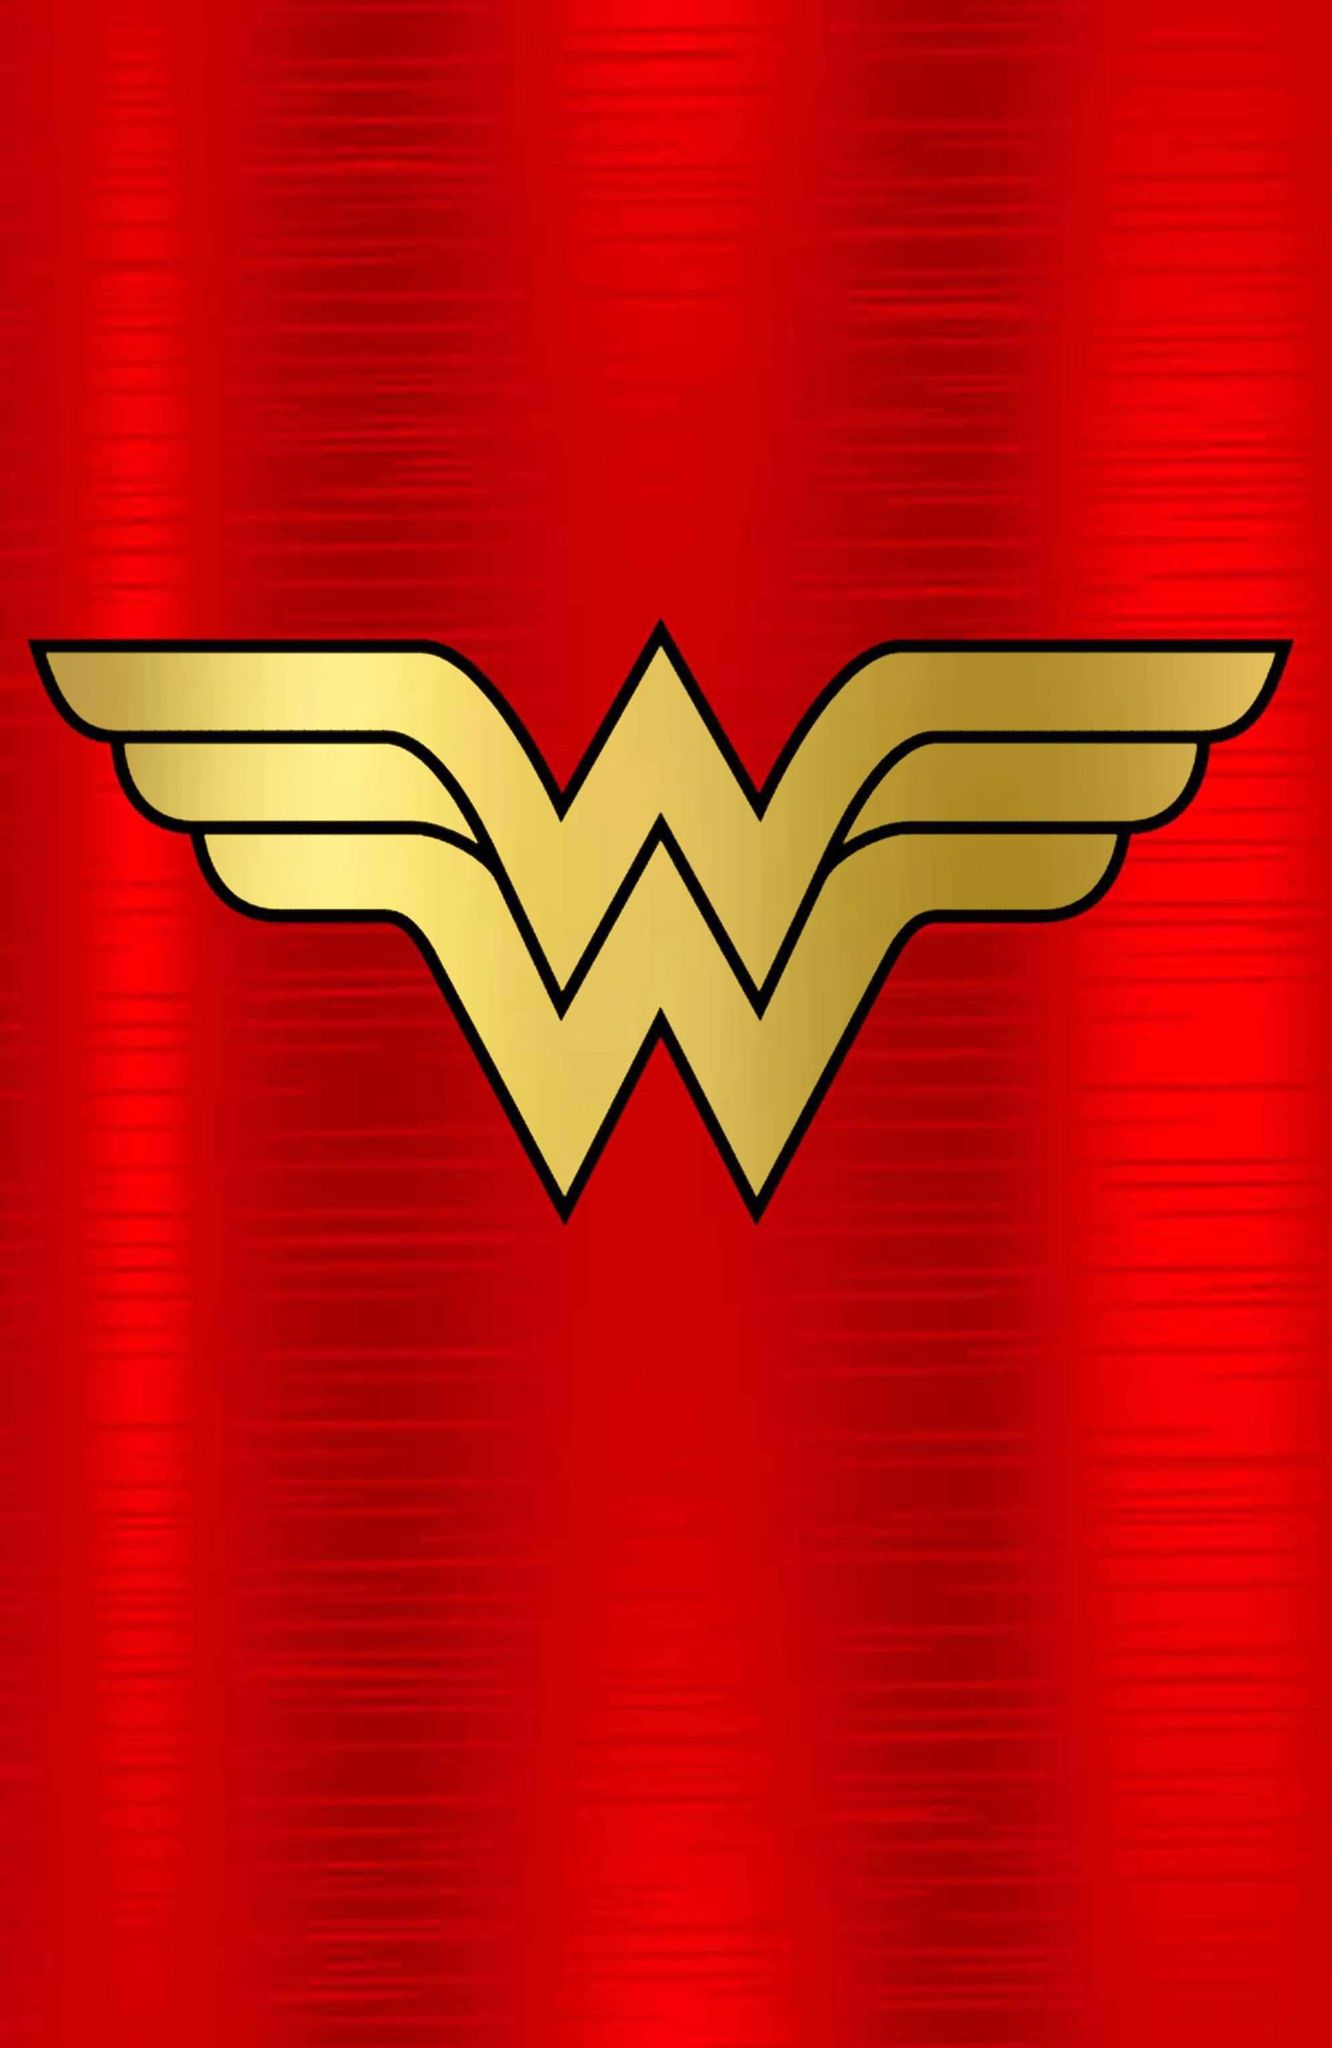 Wonder Woman Foil Panty 3-Pack-3XLarge 